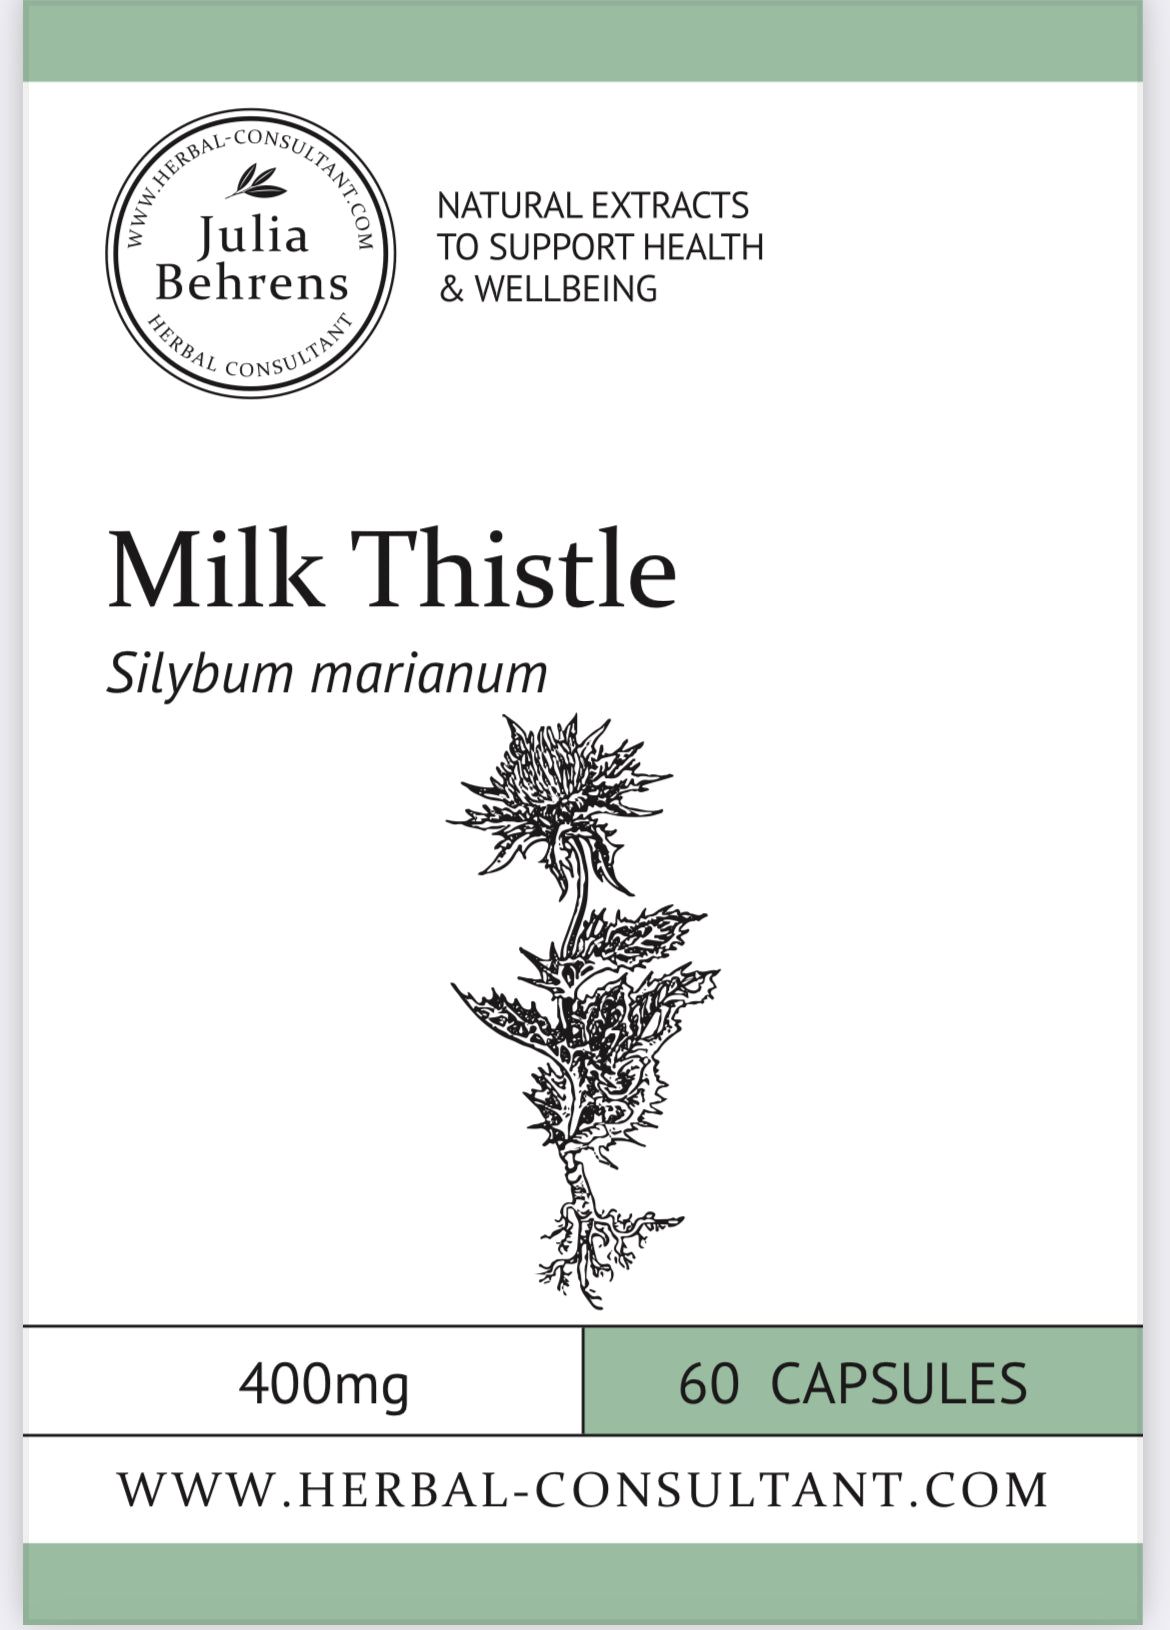 Milk Thistle capsules by Julie Behrens